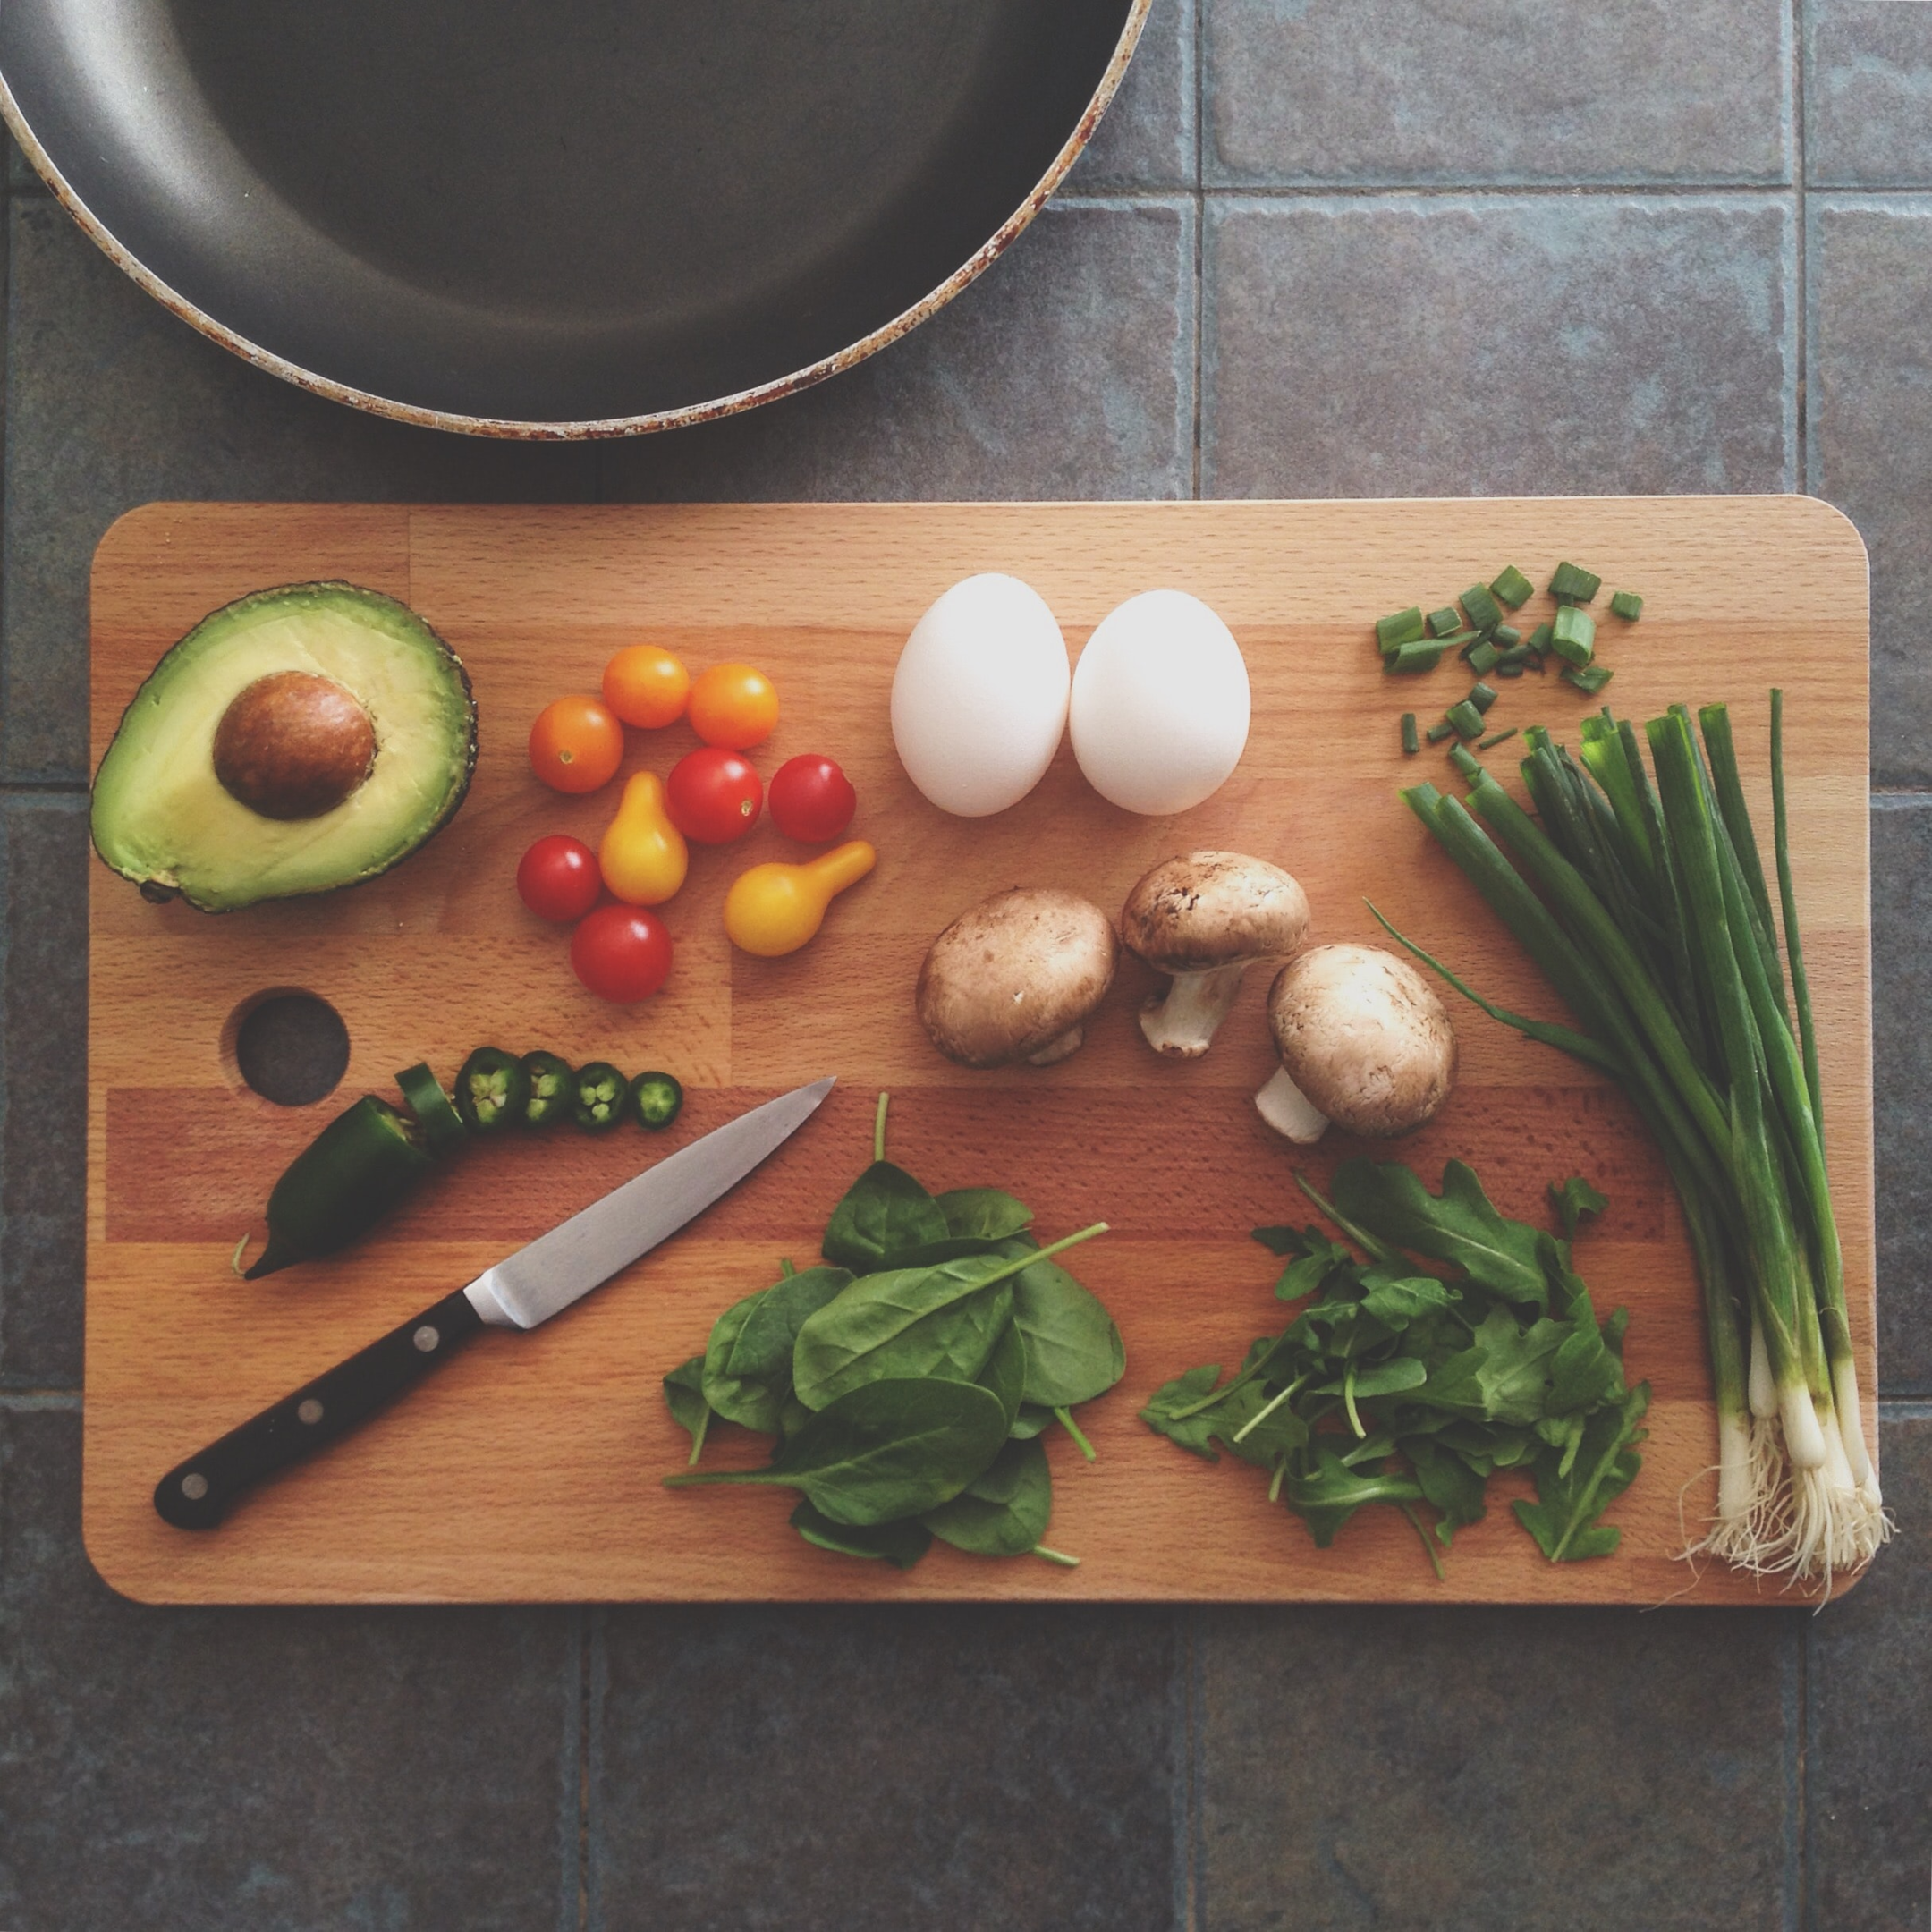 Kitchen Essentials To Help You Make Healthy Foods